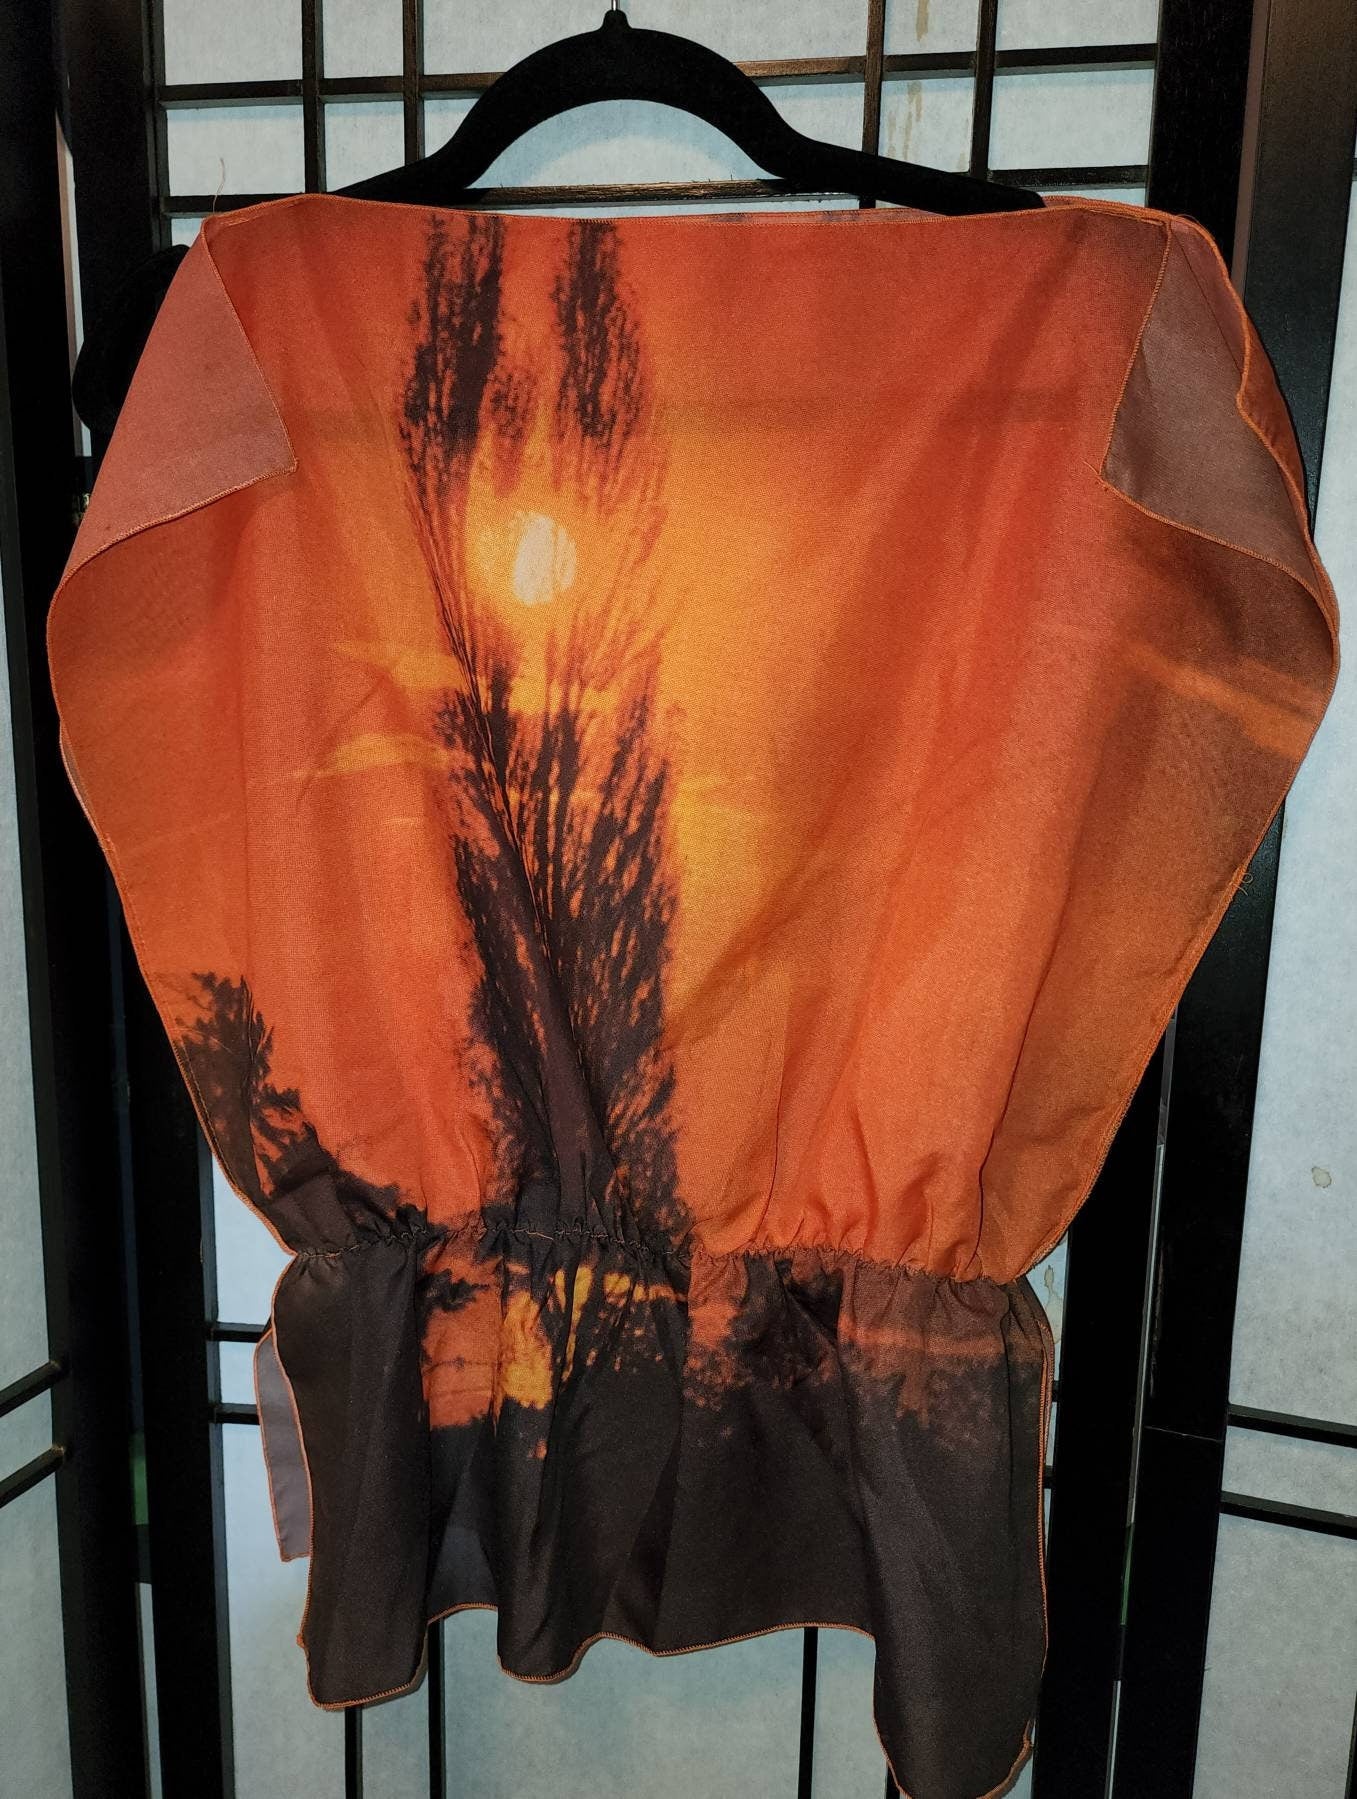 Vintage 1970s Top Amazing Photorealism Tree Sunset Print Both Sides Thin Nylon Pullover Top Peplum Waist Surfer Boho Beach M L